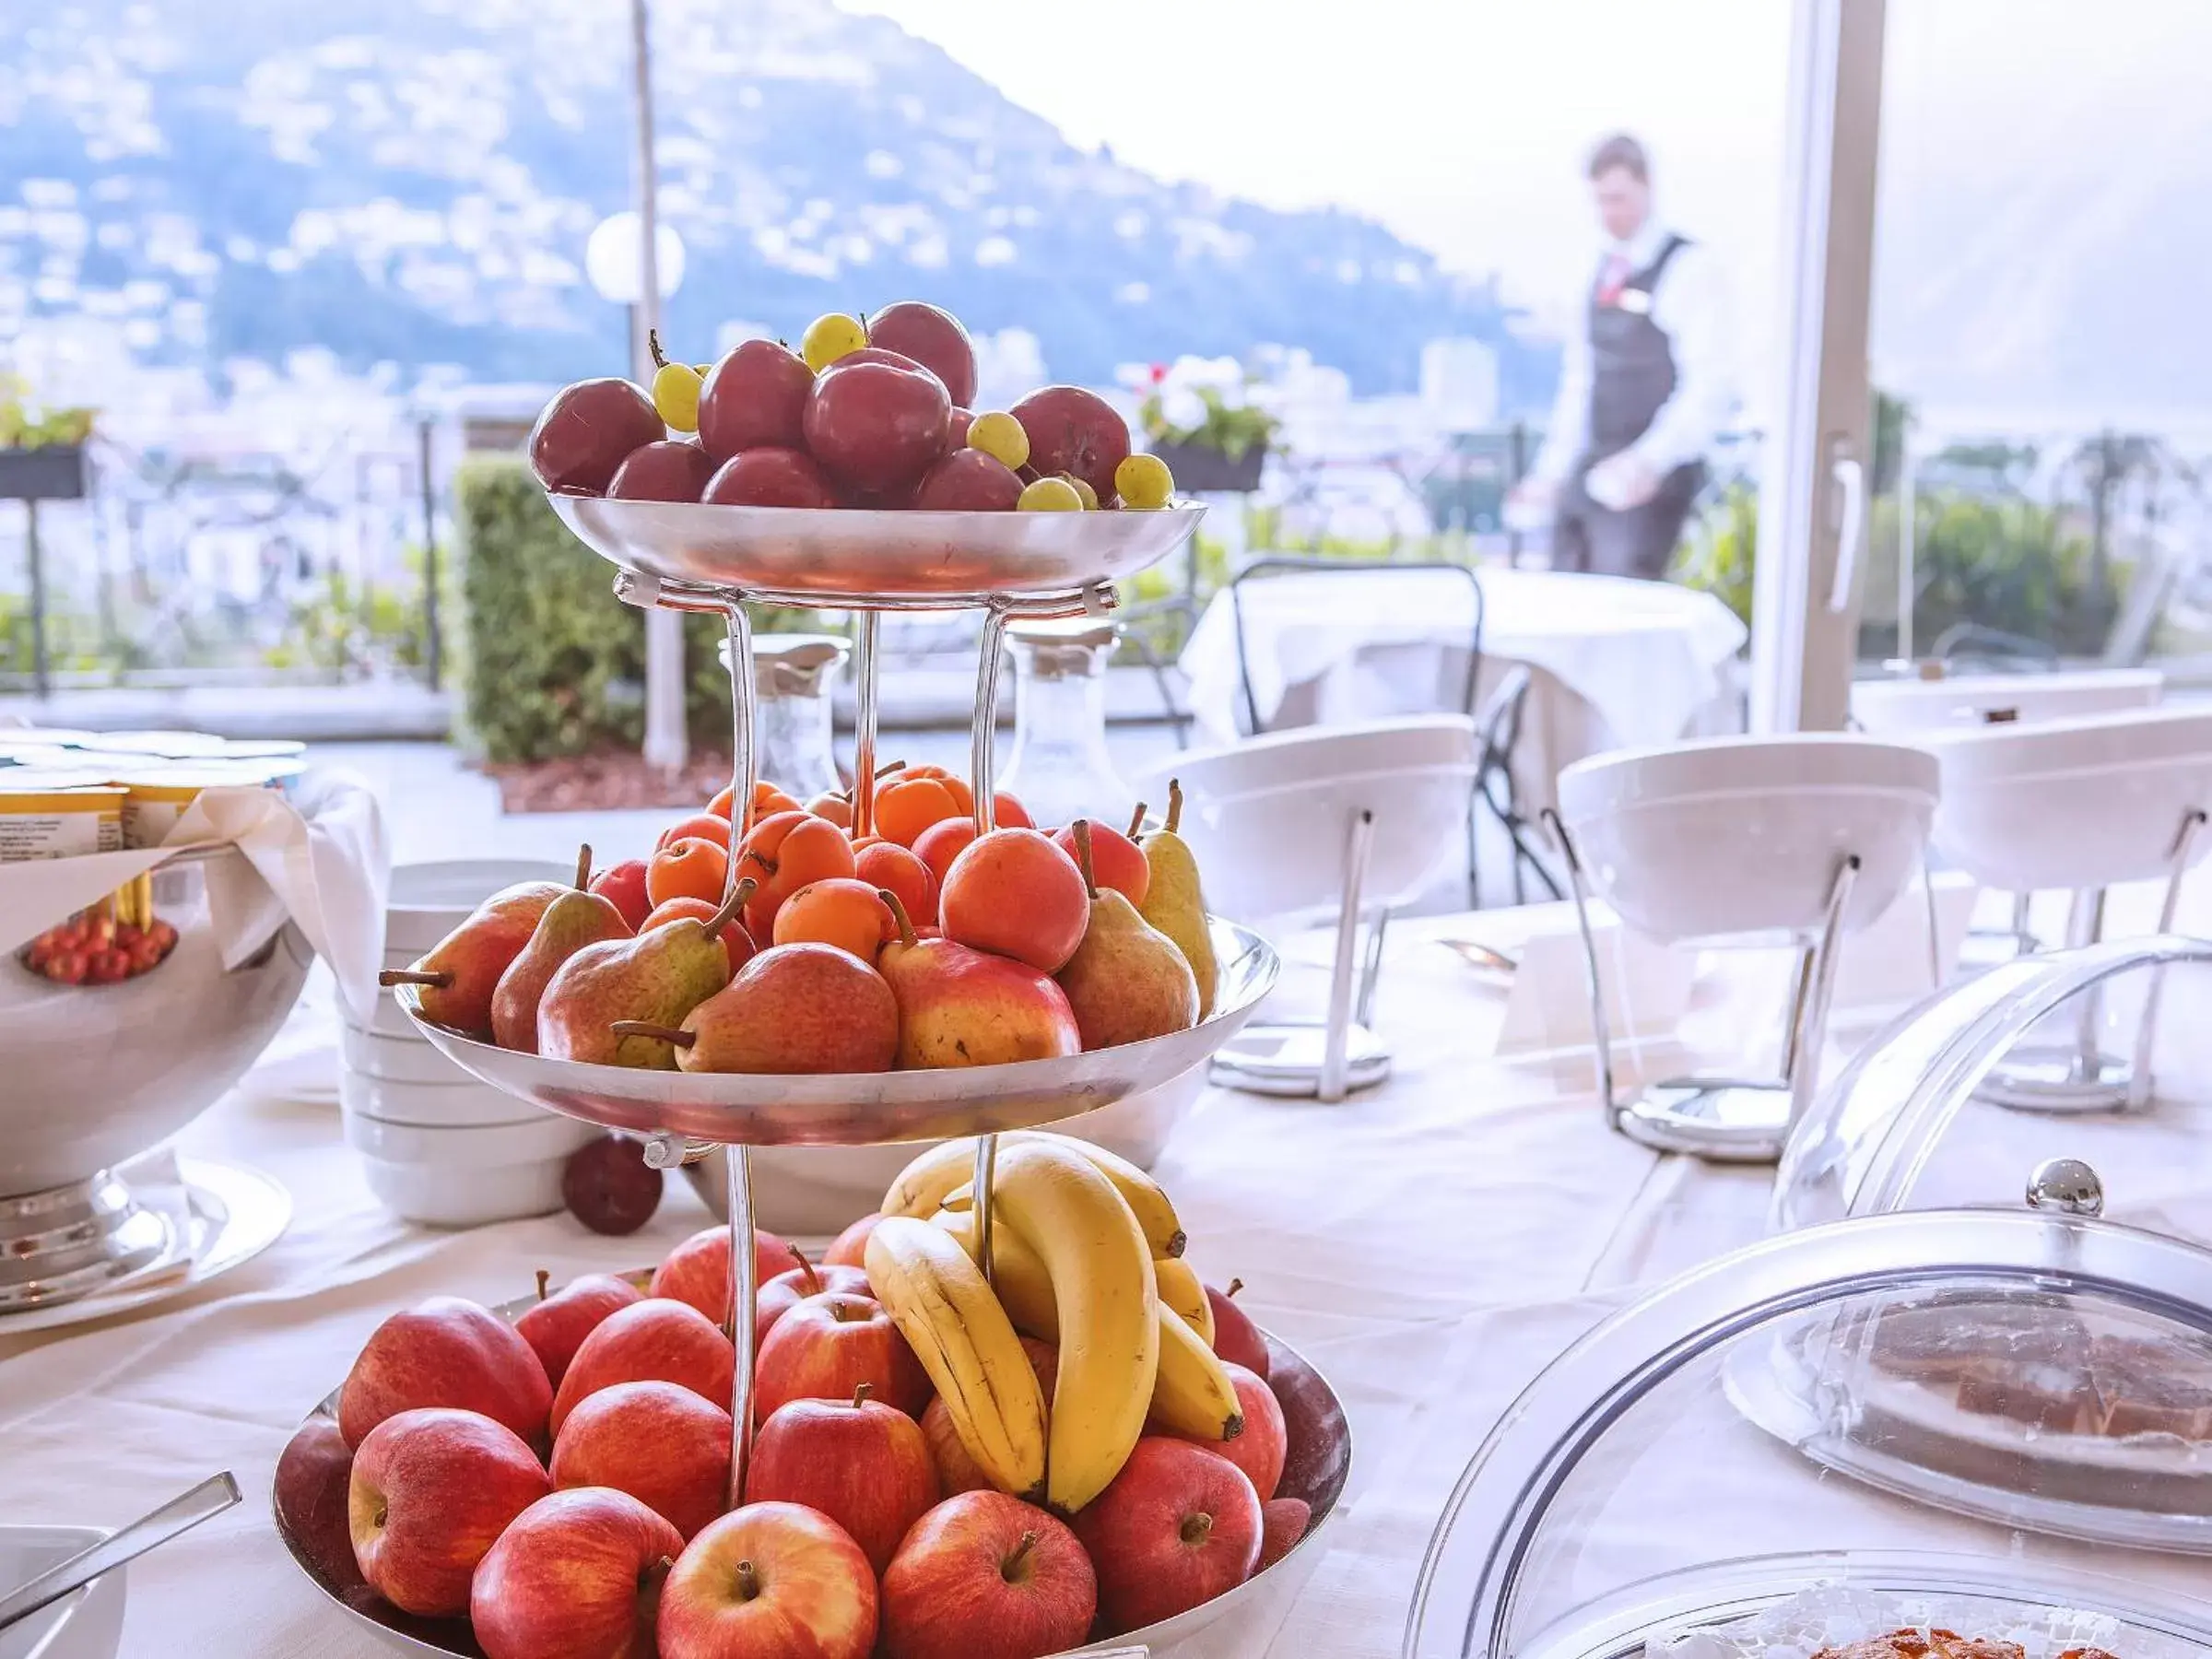 Breakfast in Villa Sassa Hotel, Residence & Spa - Ticino Hotels Group